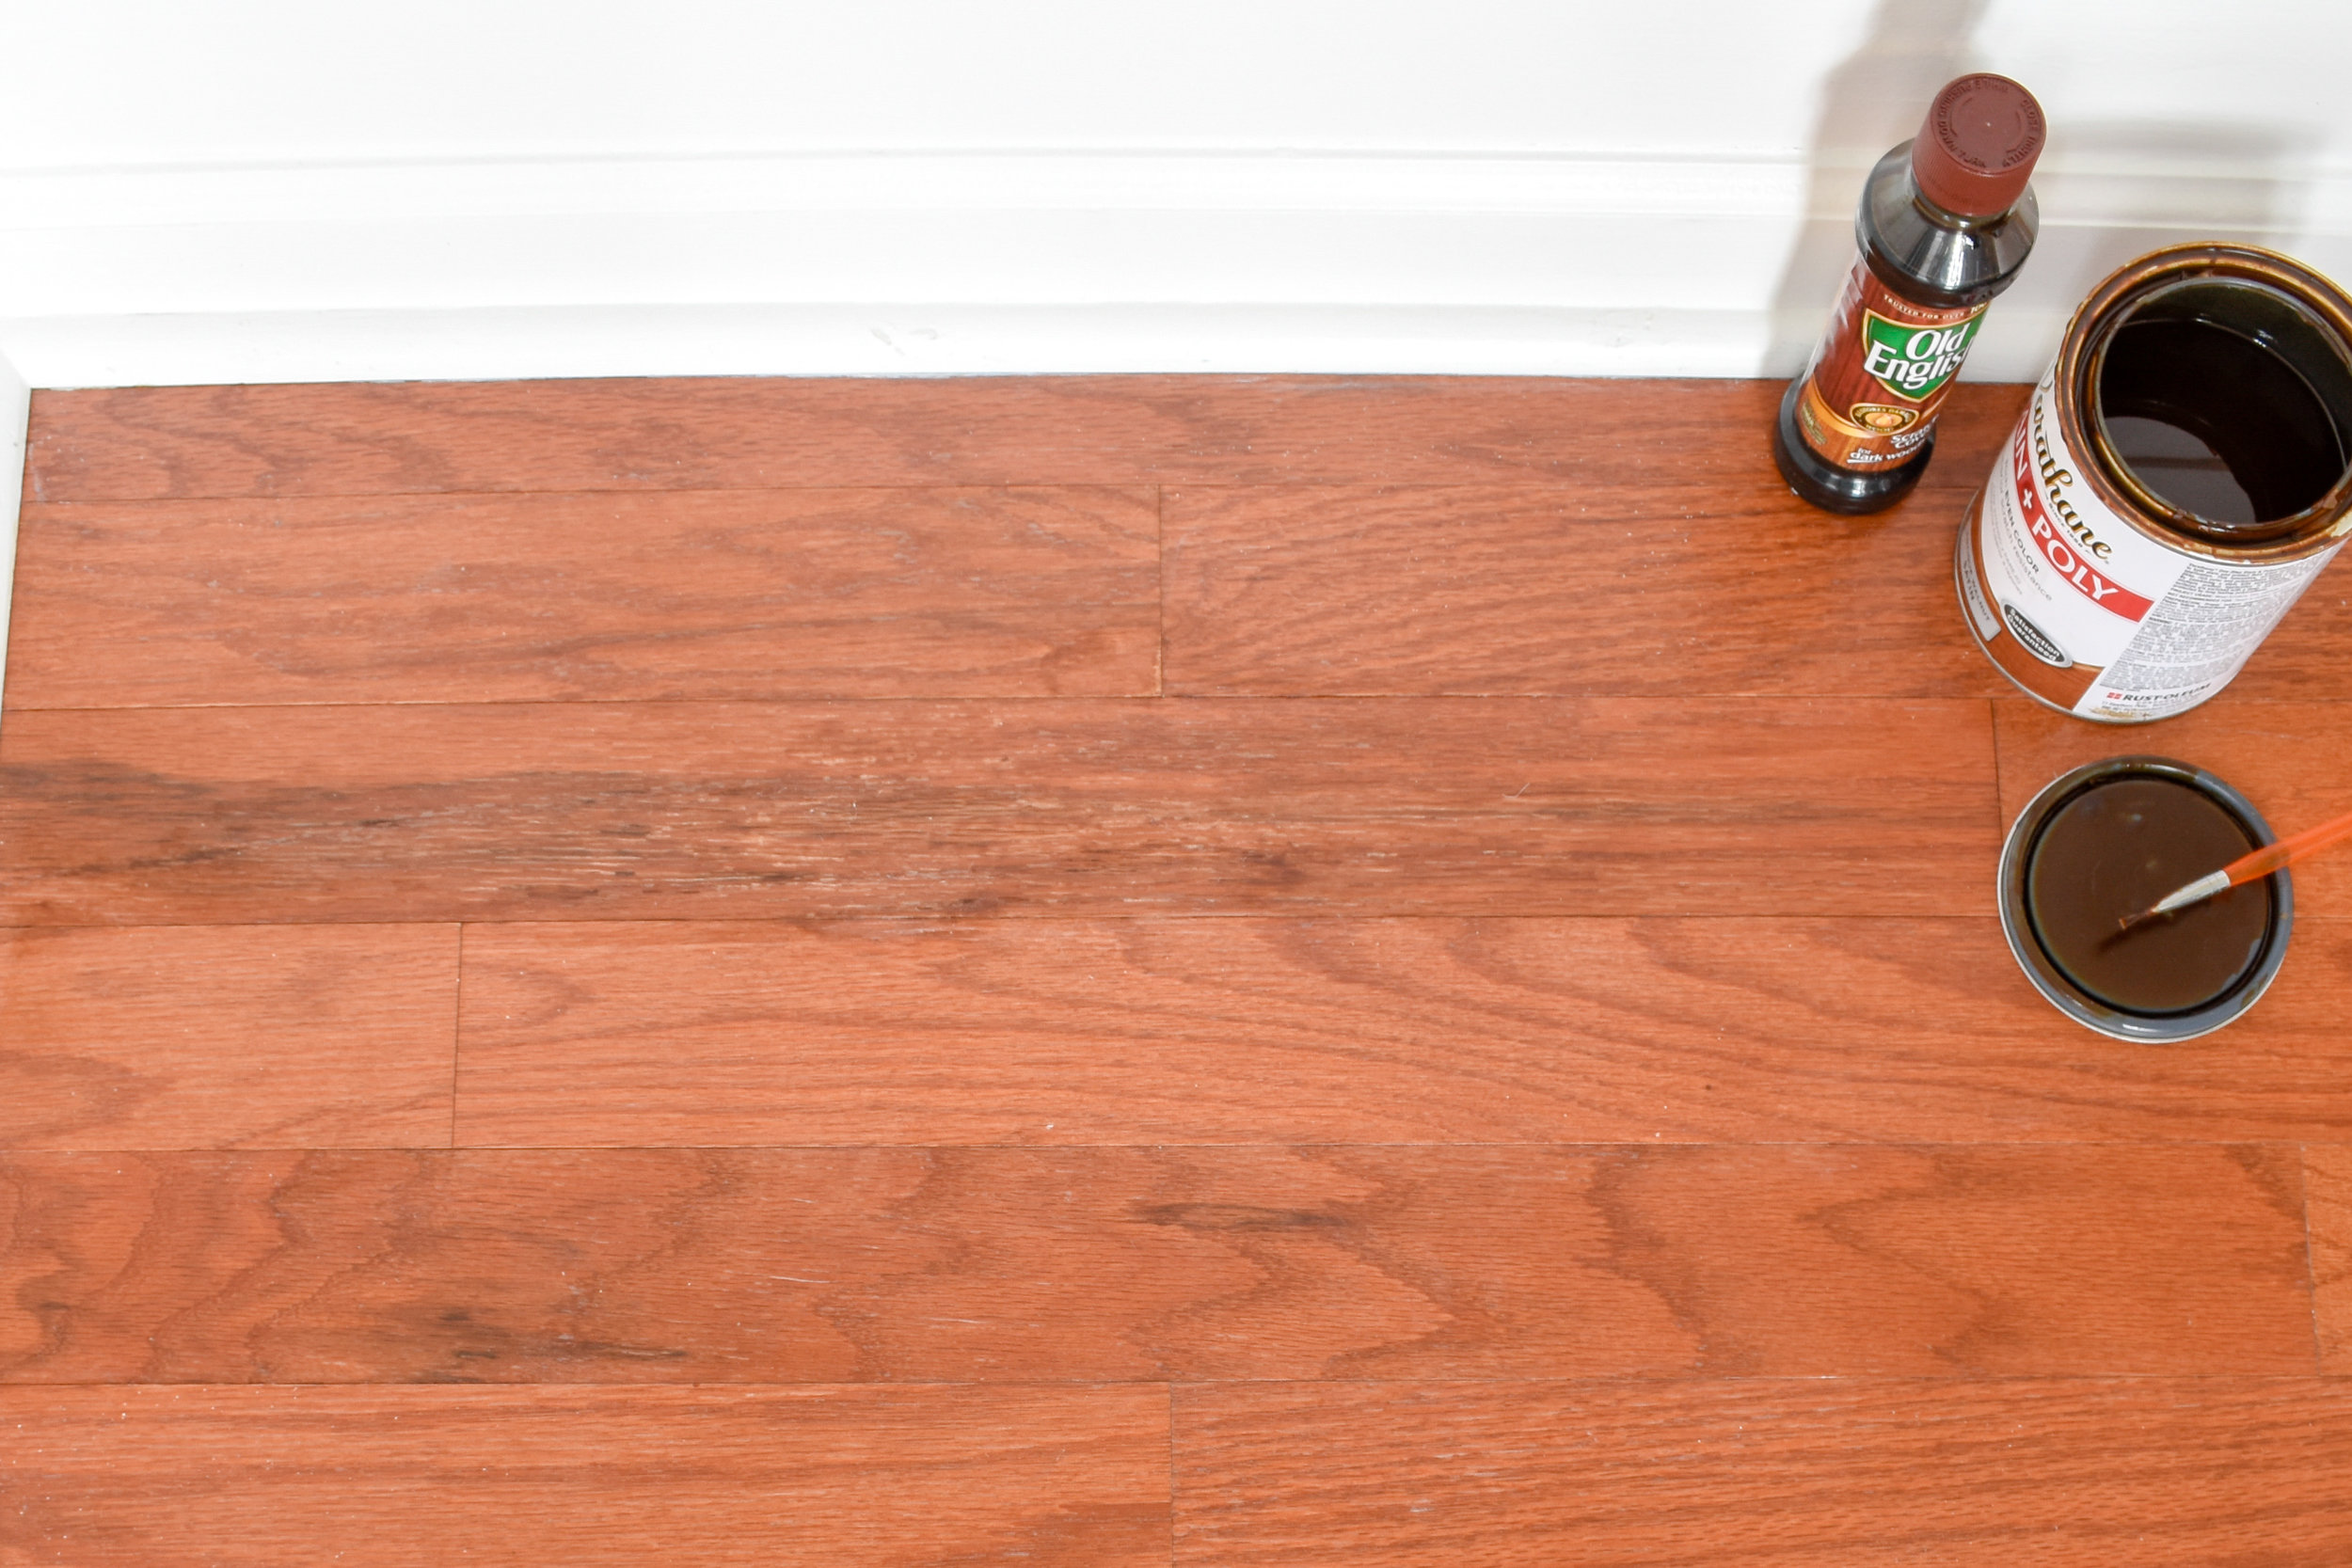 How To Make Old Hardwood Floors Shine, Protect Hardwood Floors From Plants